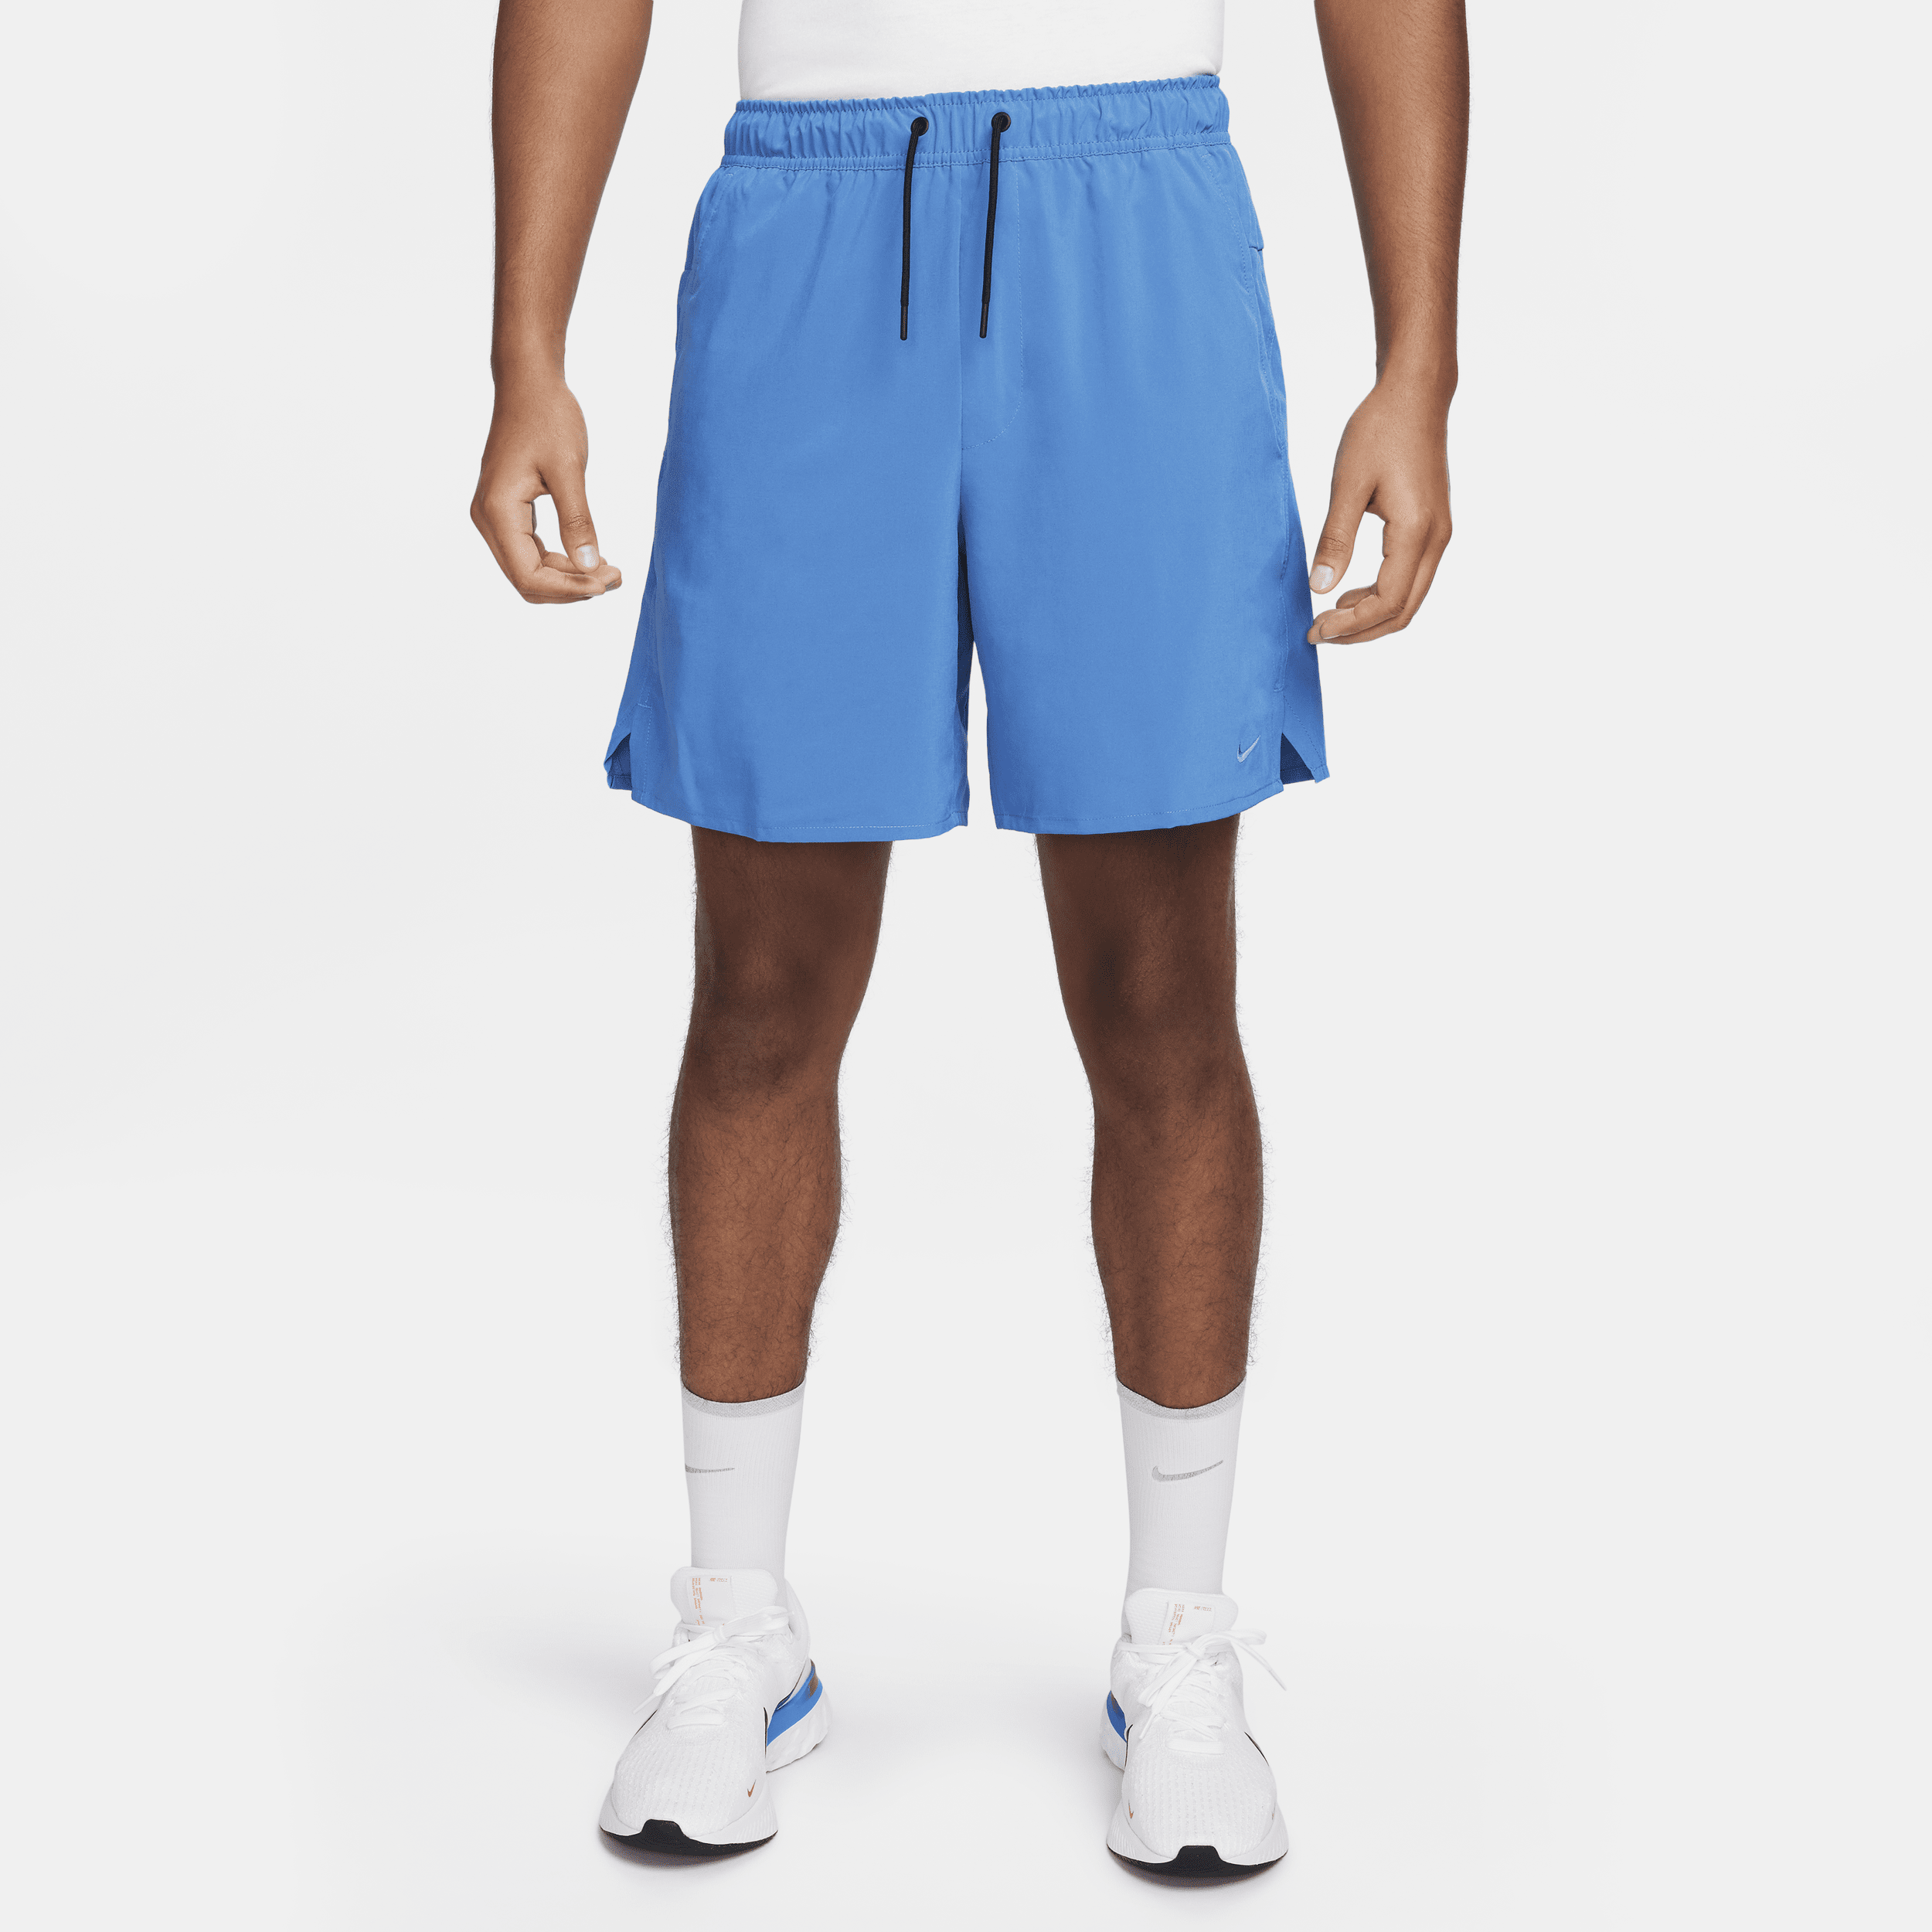 Shorts versatili Dri-FIT non foderati 18 cm Nike Unlimited – Uomo - Blu